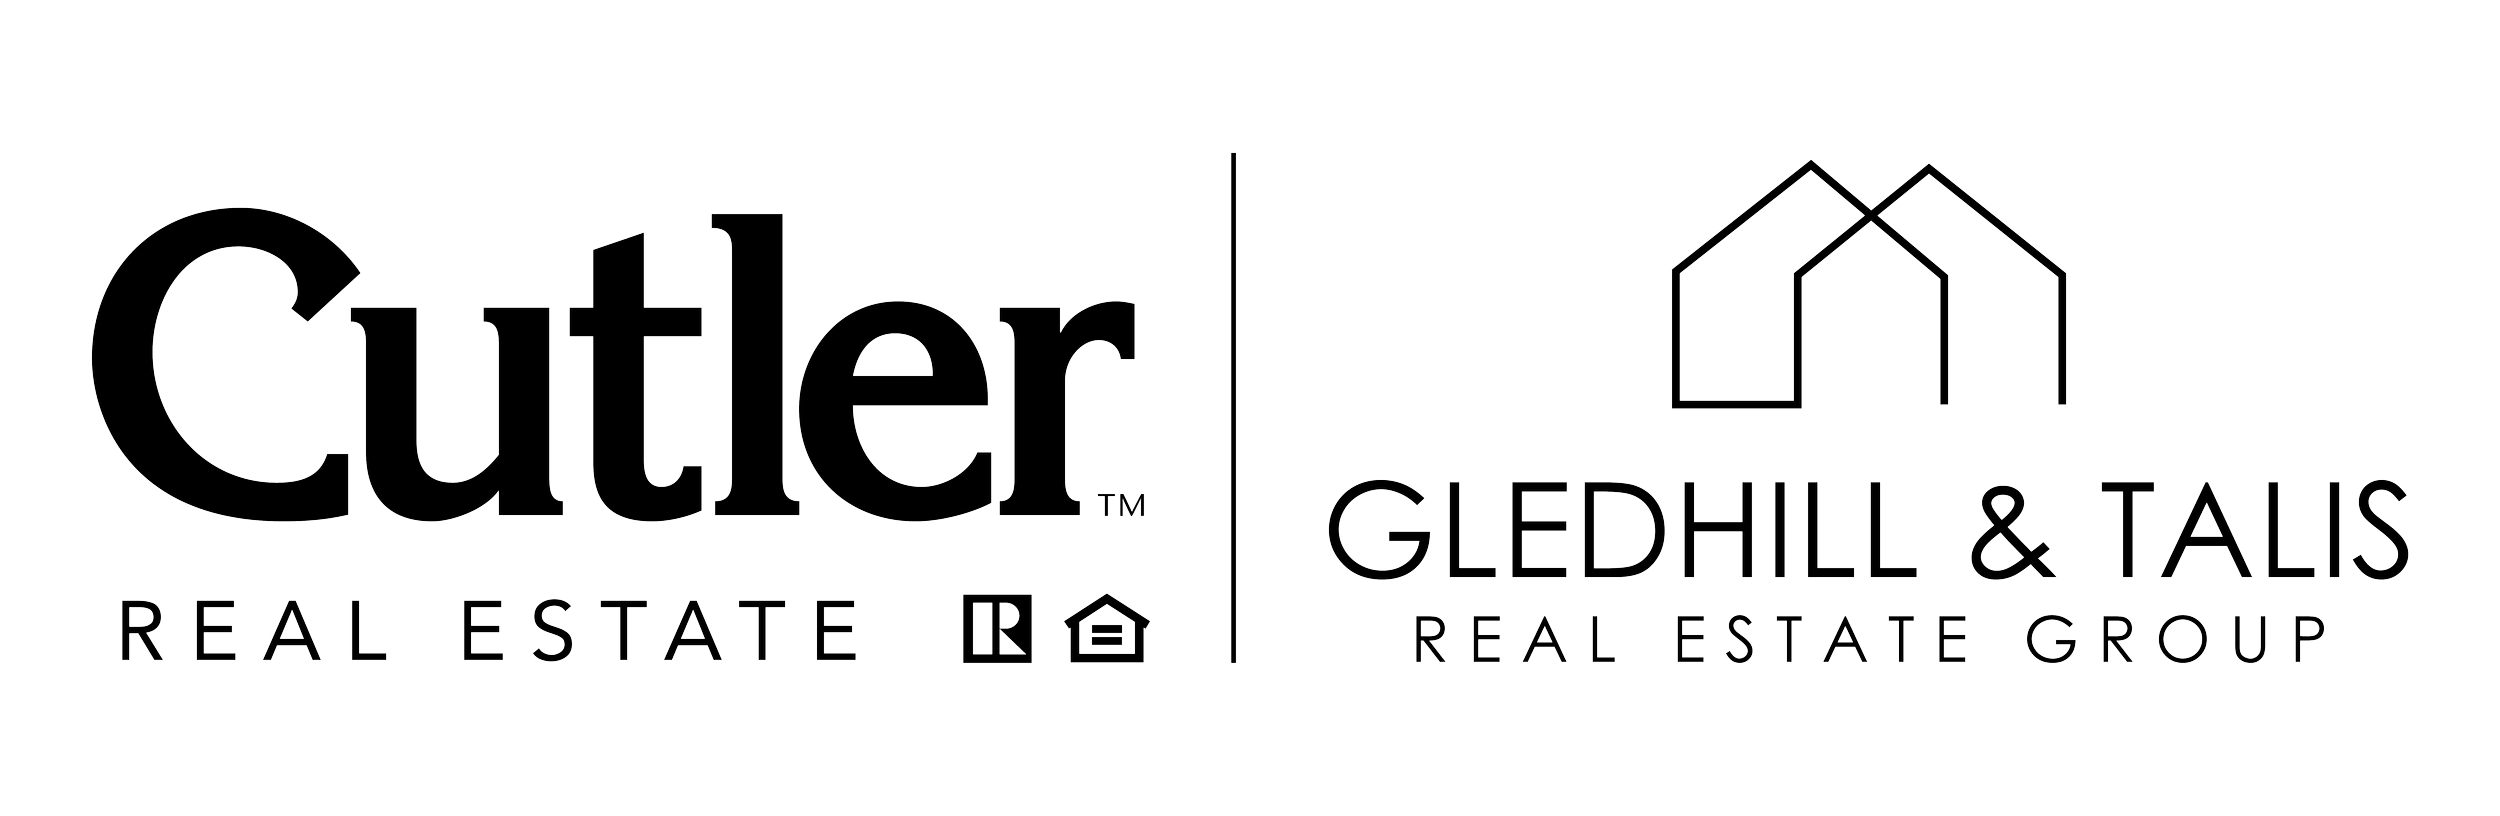 Gledhill & Talis_Cutler_Combo Logo_2024_Black-01.png